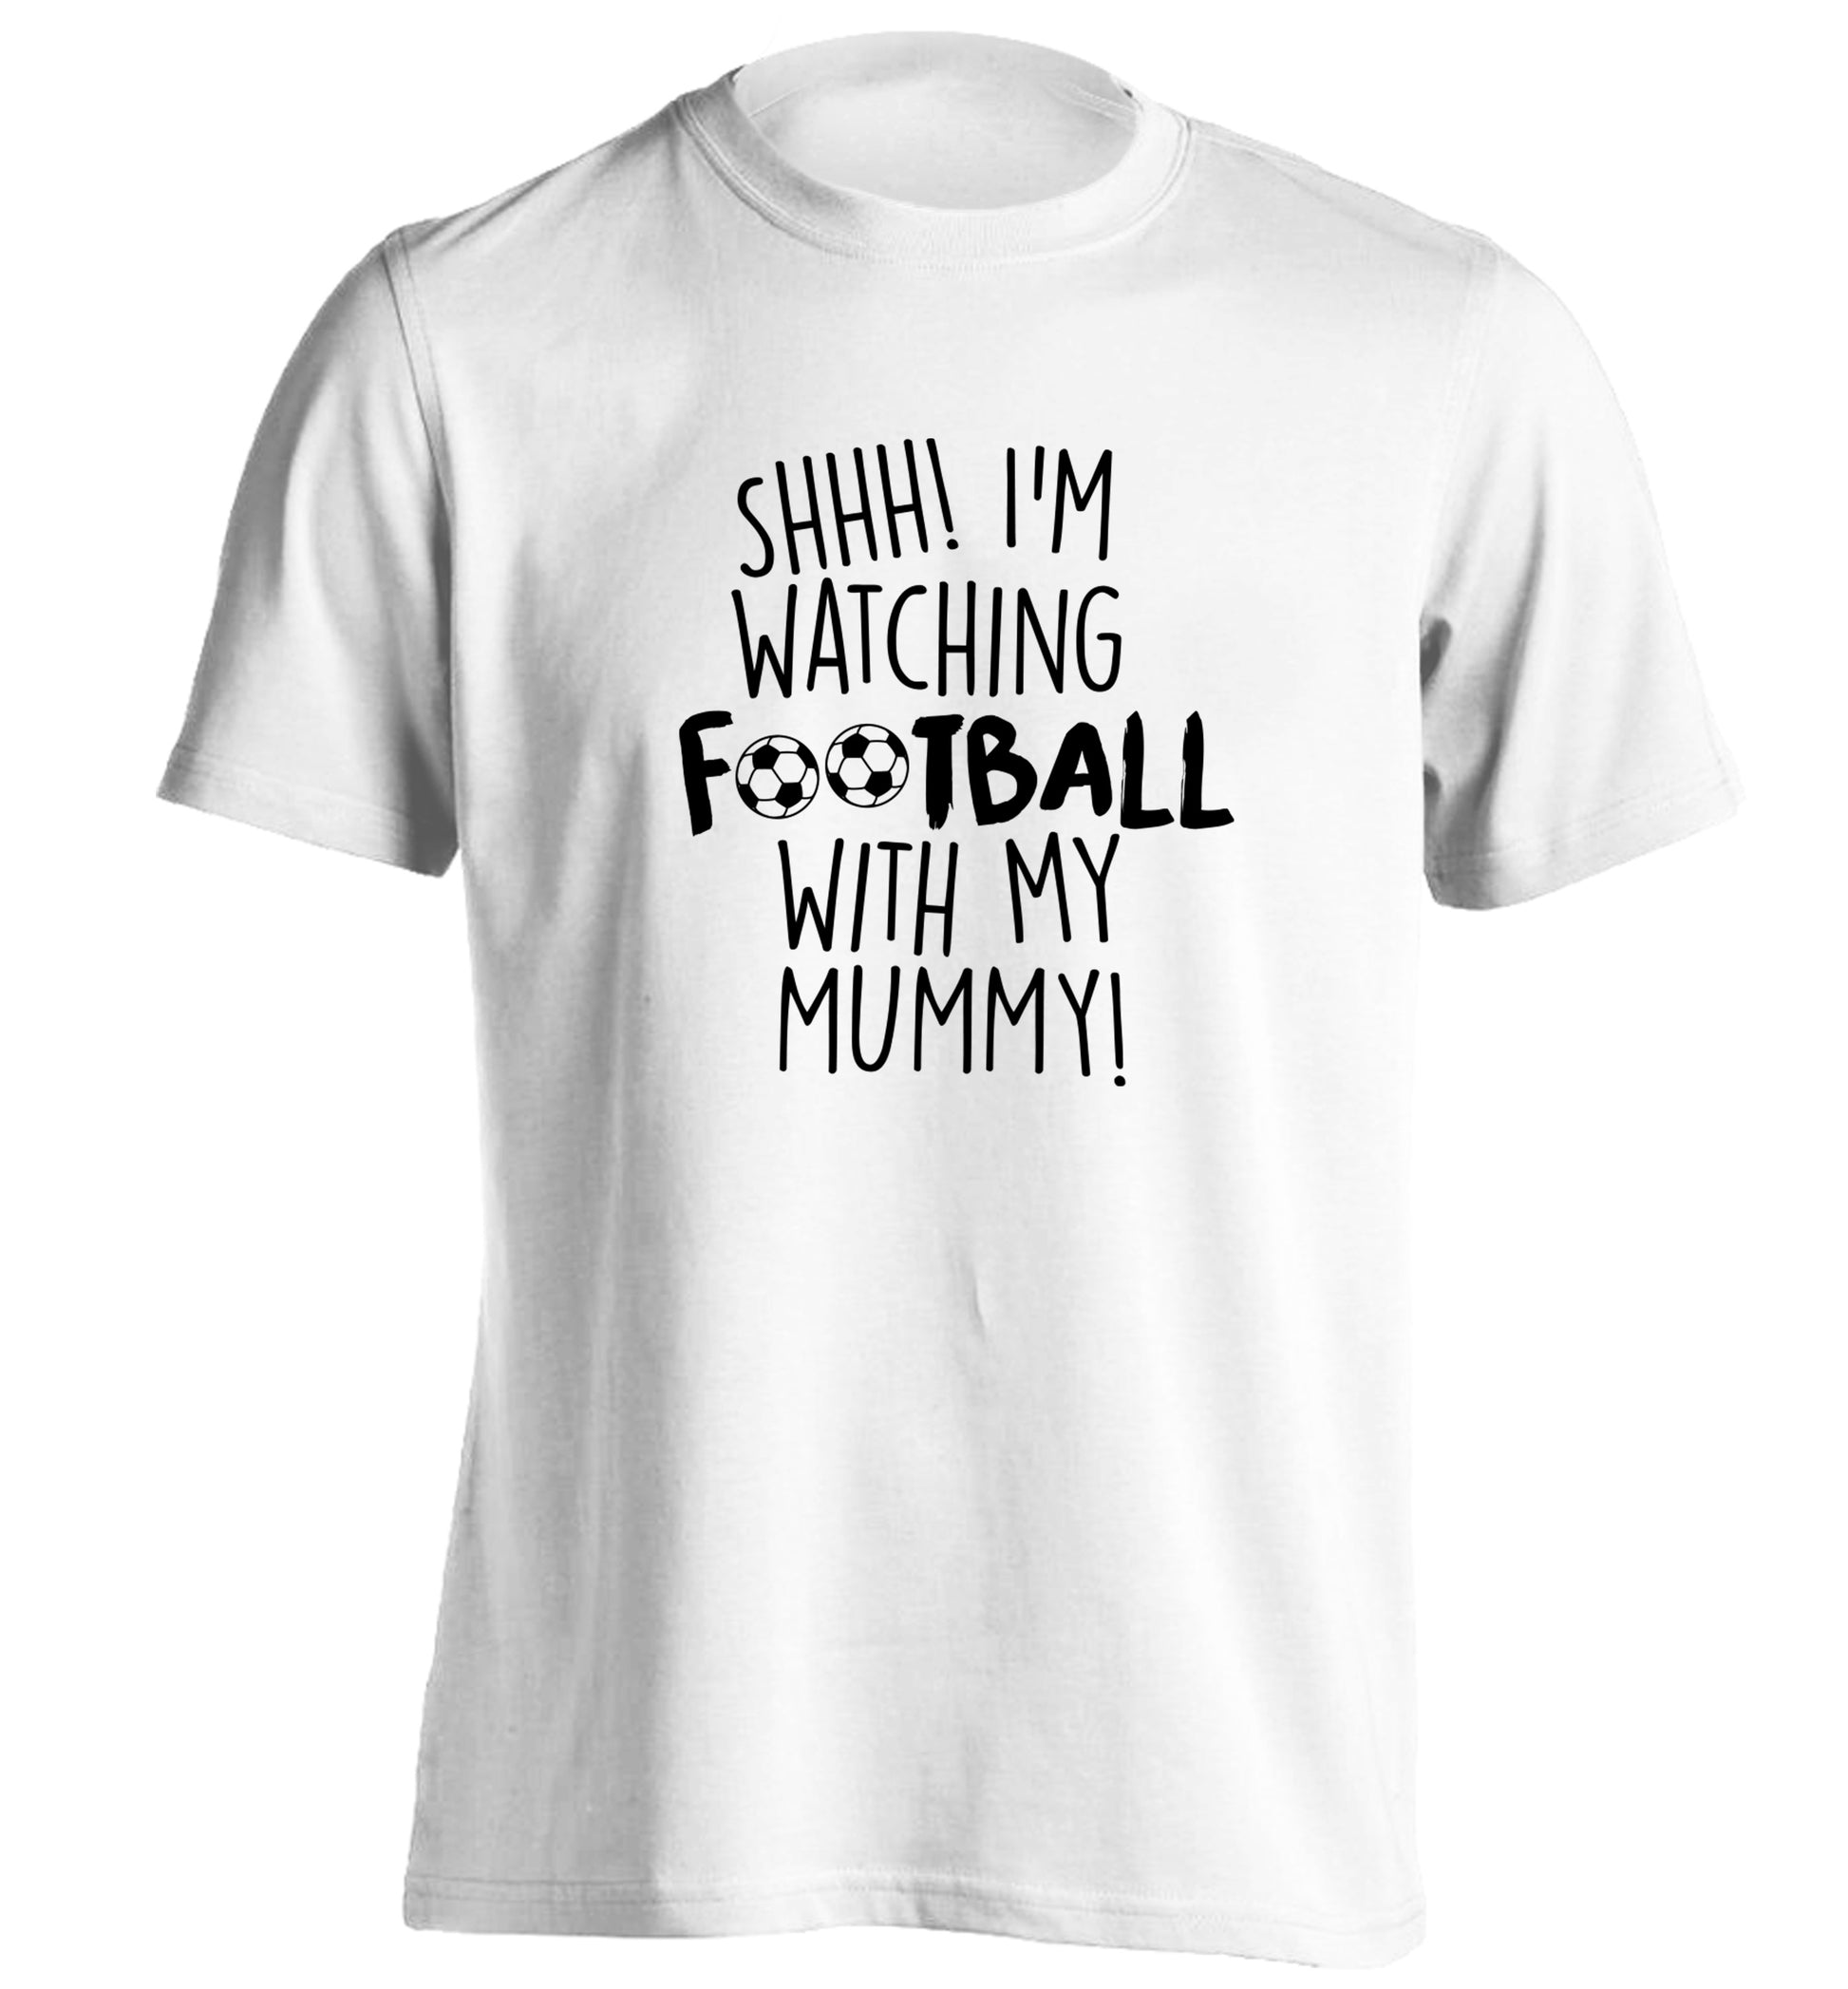 Shhh I'm watching football with my mummy adults unisexwhite Tshirt 2XL